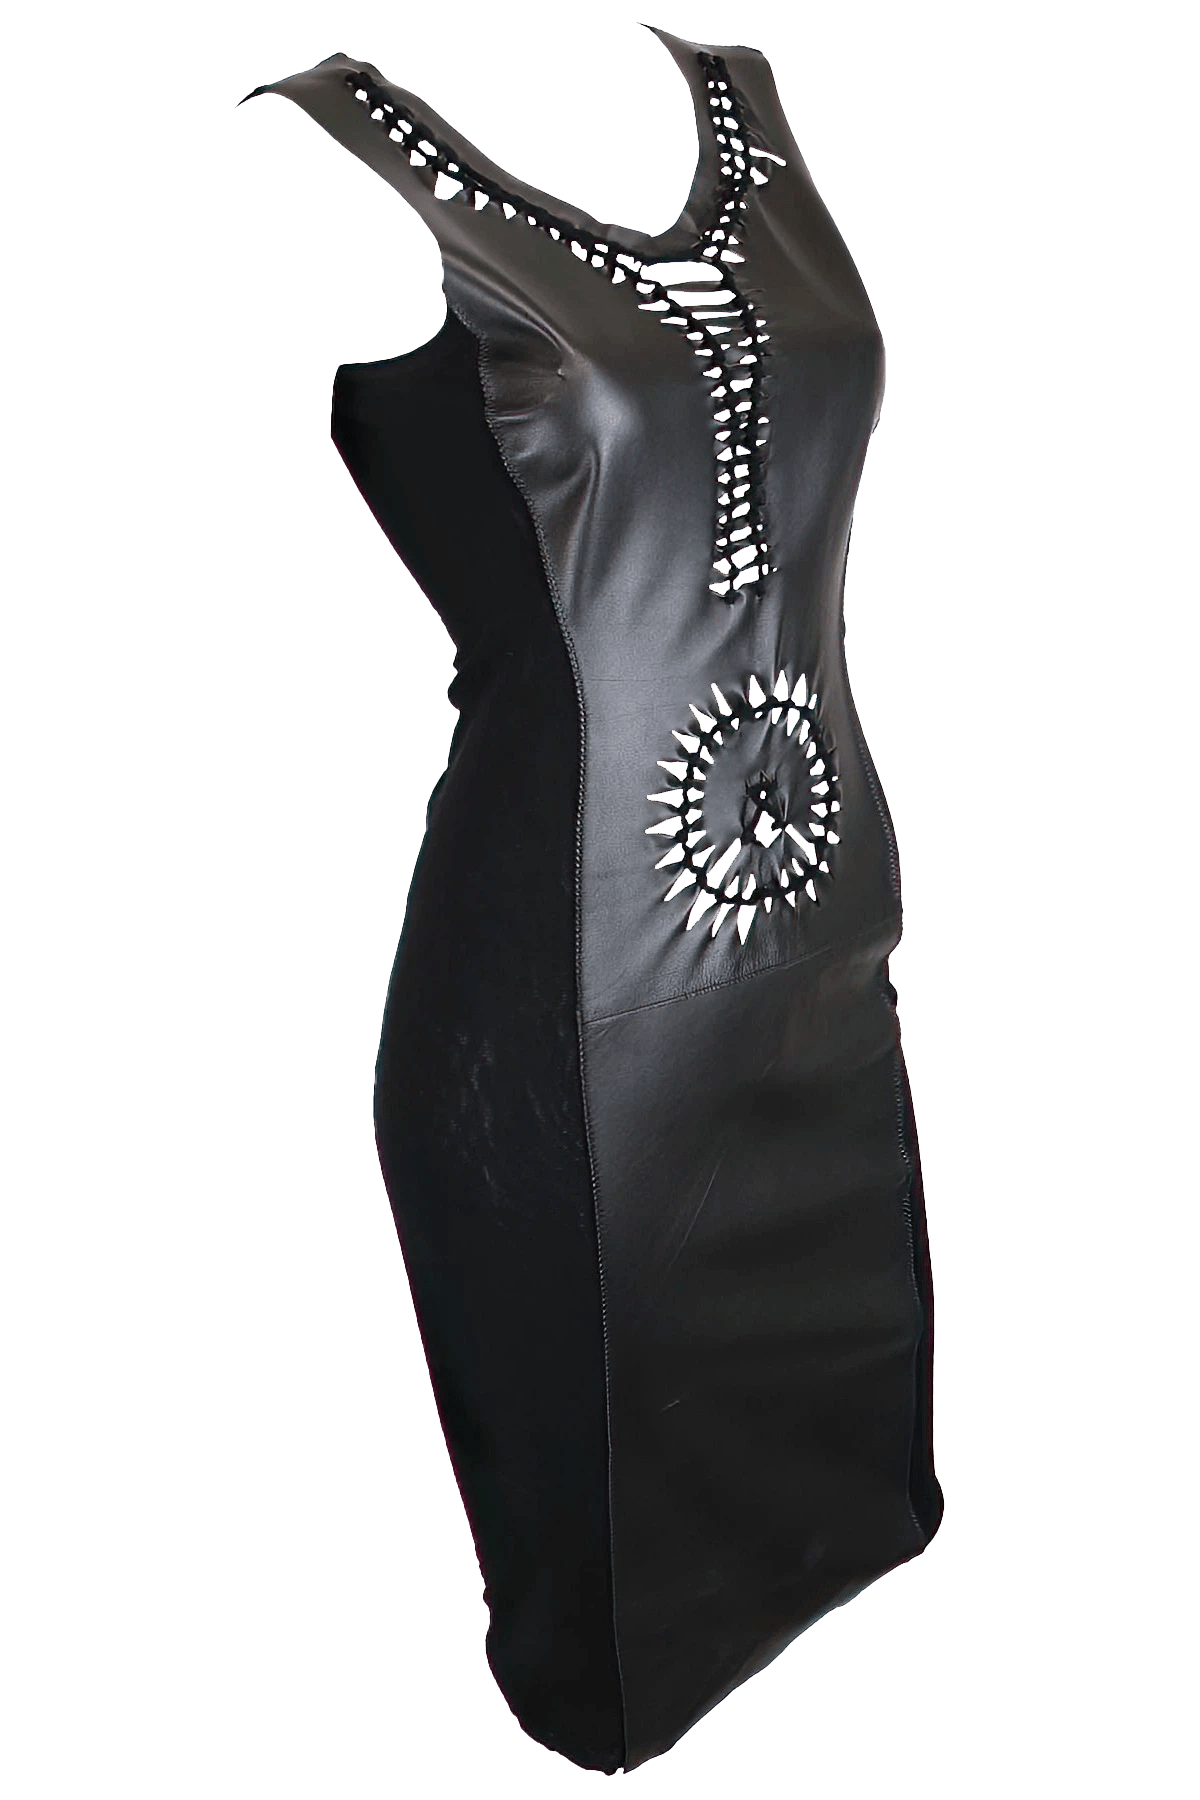 Jean Paul Gaultier Soleil Leather Cut Out Dress